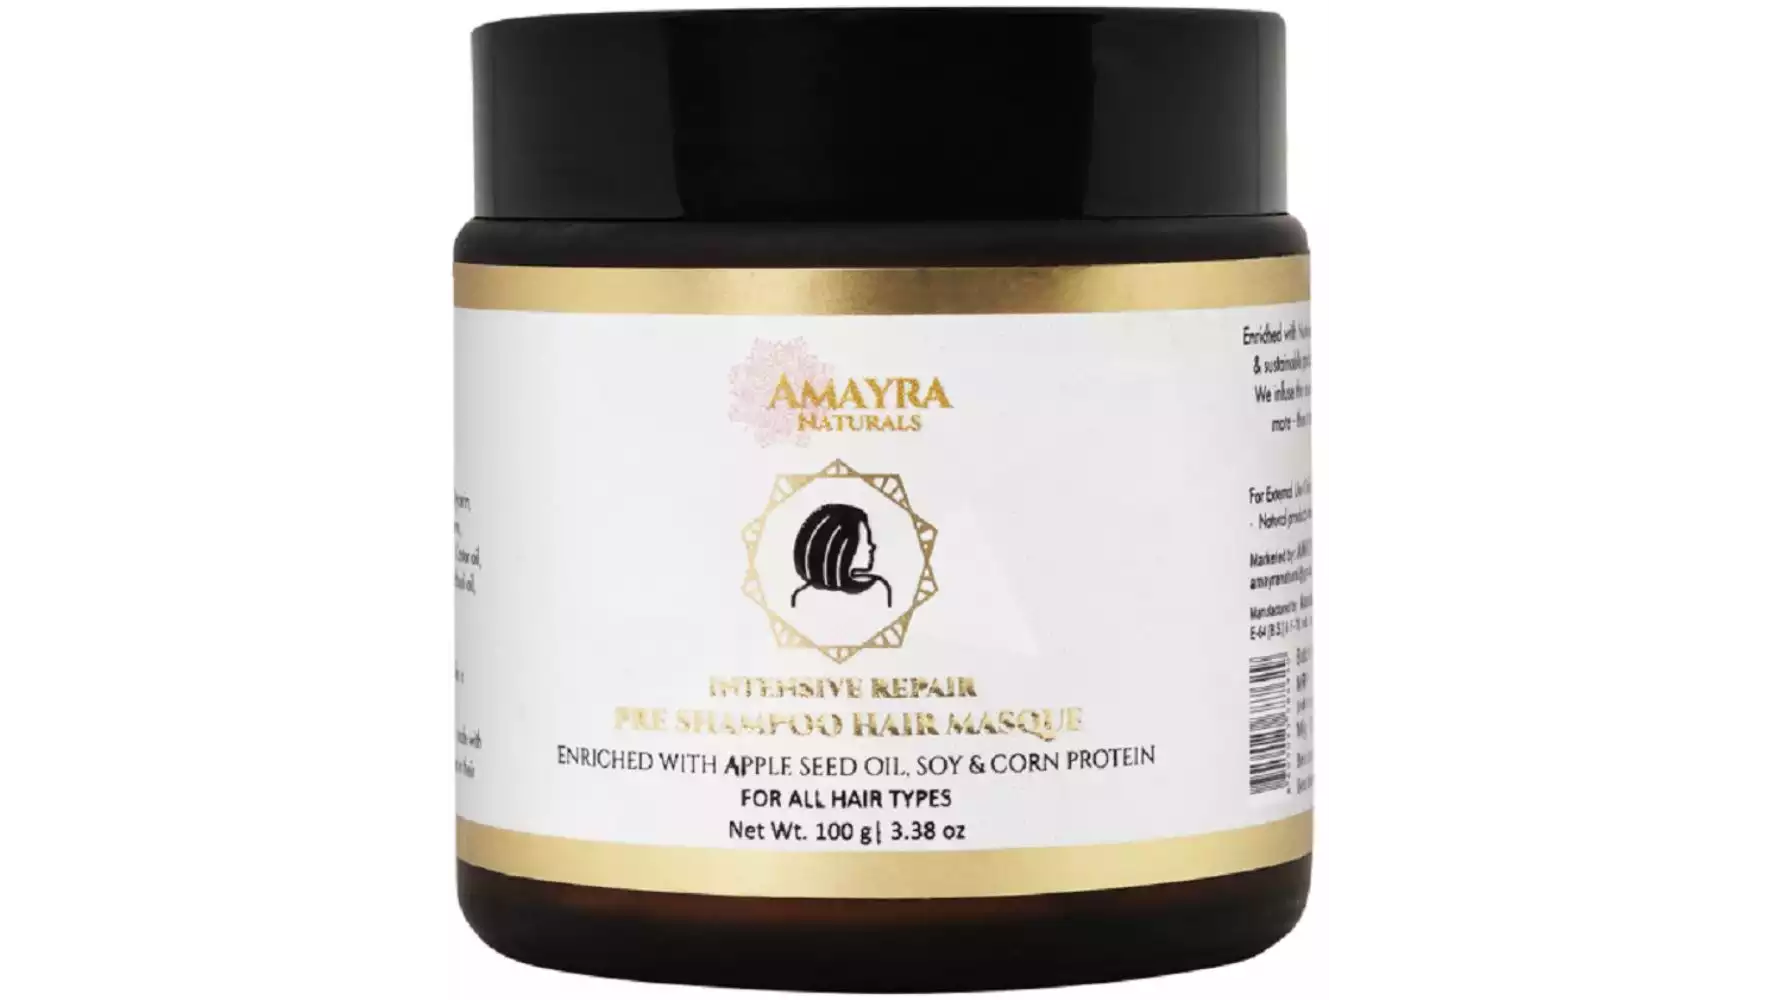 Amayra Naturals Intensive Repair Pre Shampoo Hair Masque (100g)